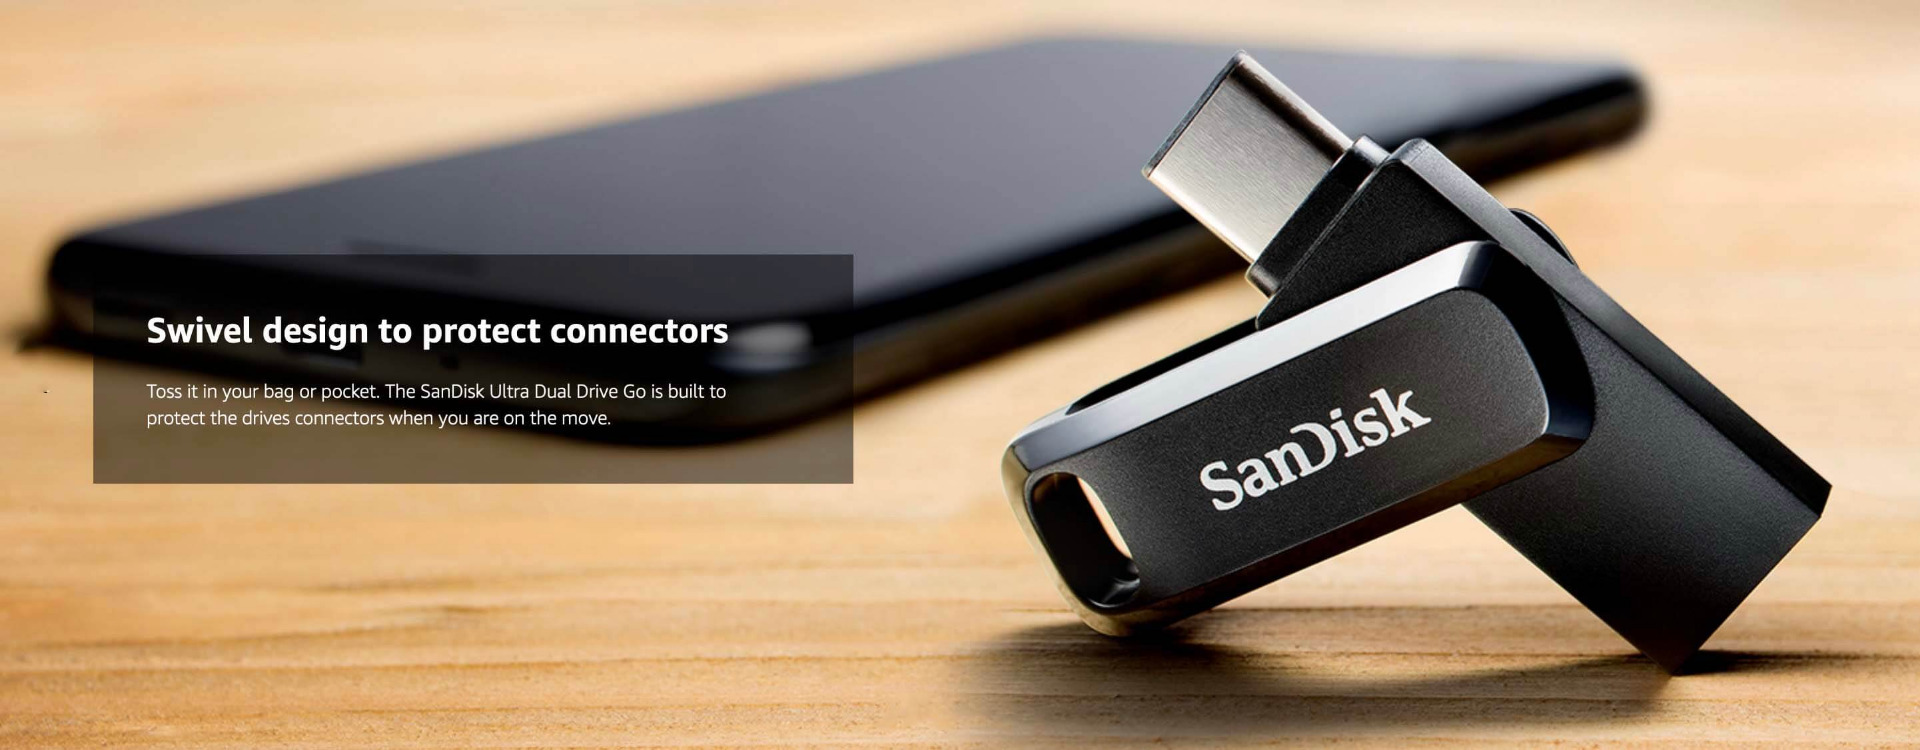  SanDisk 32GB Ultra Dual Drive Go USB Type-C Flash